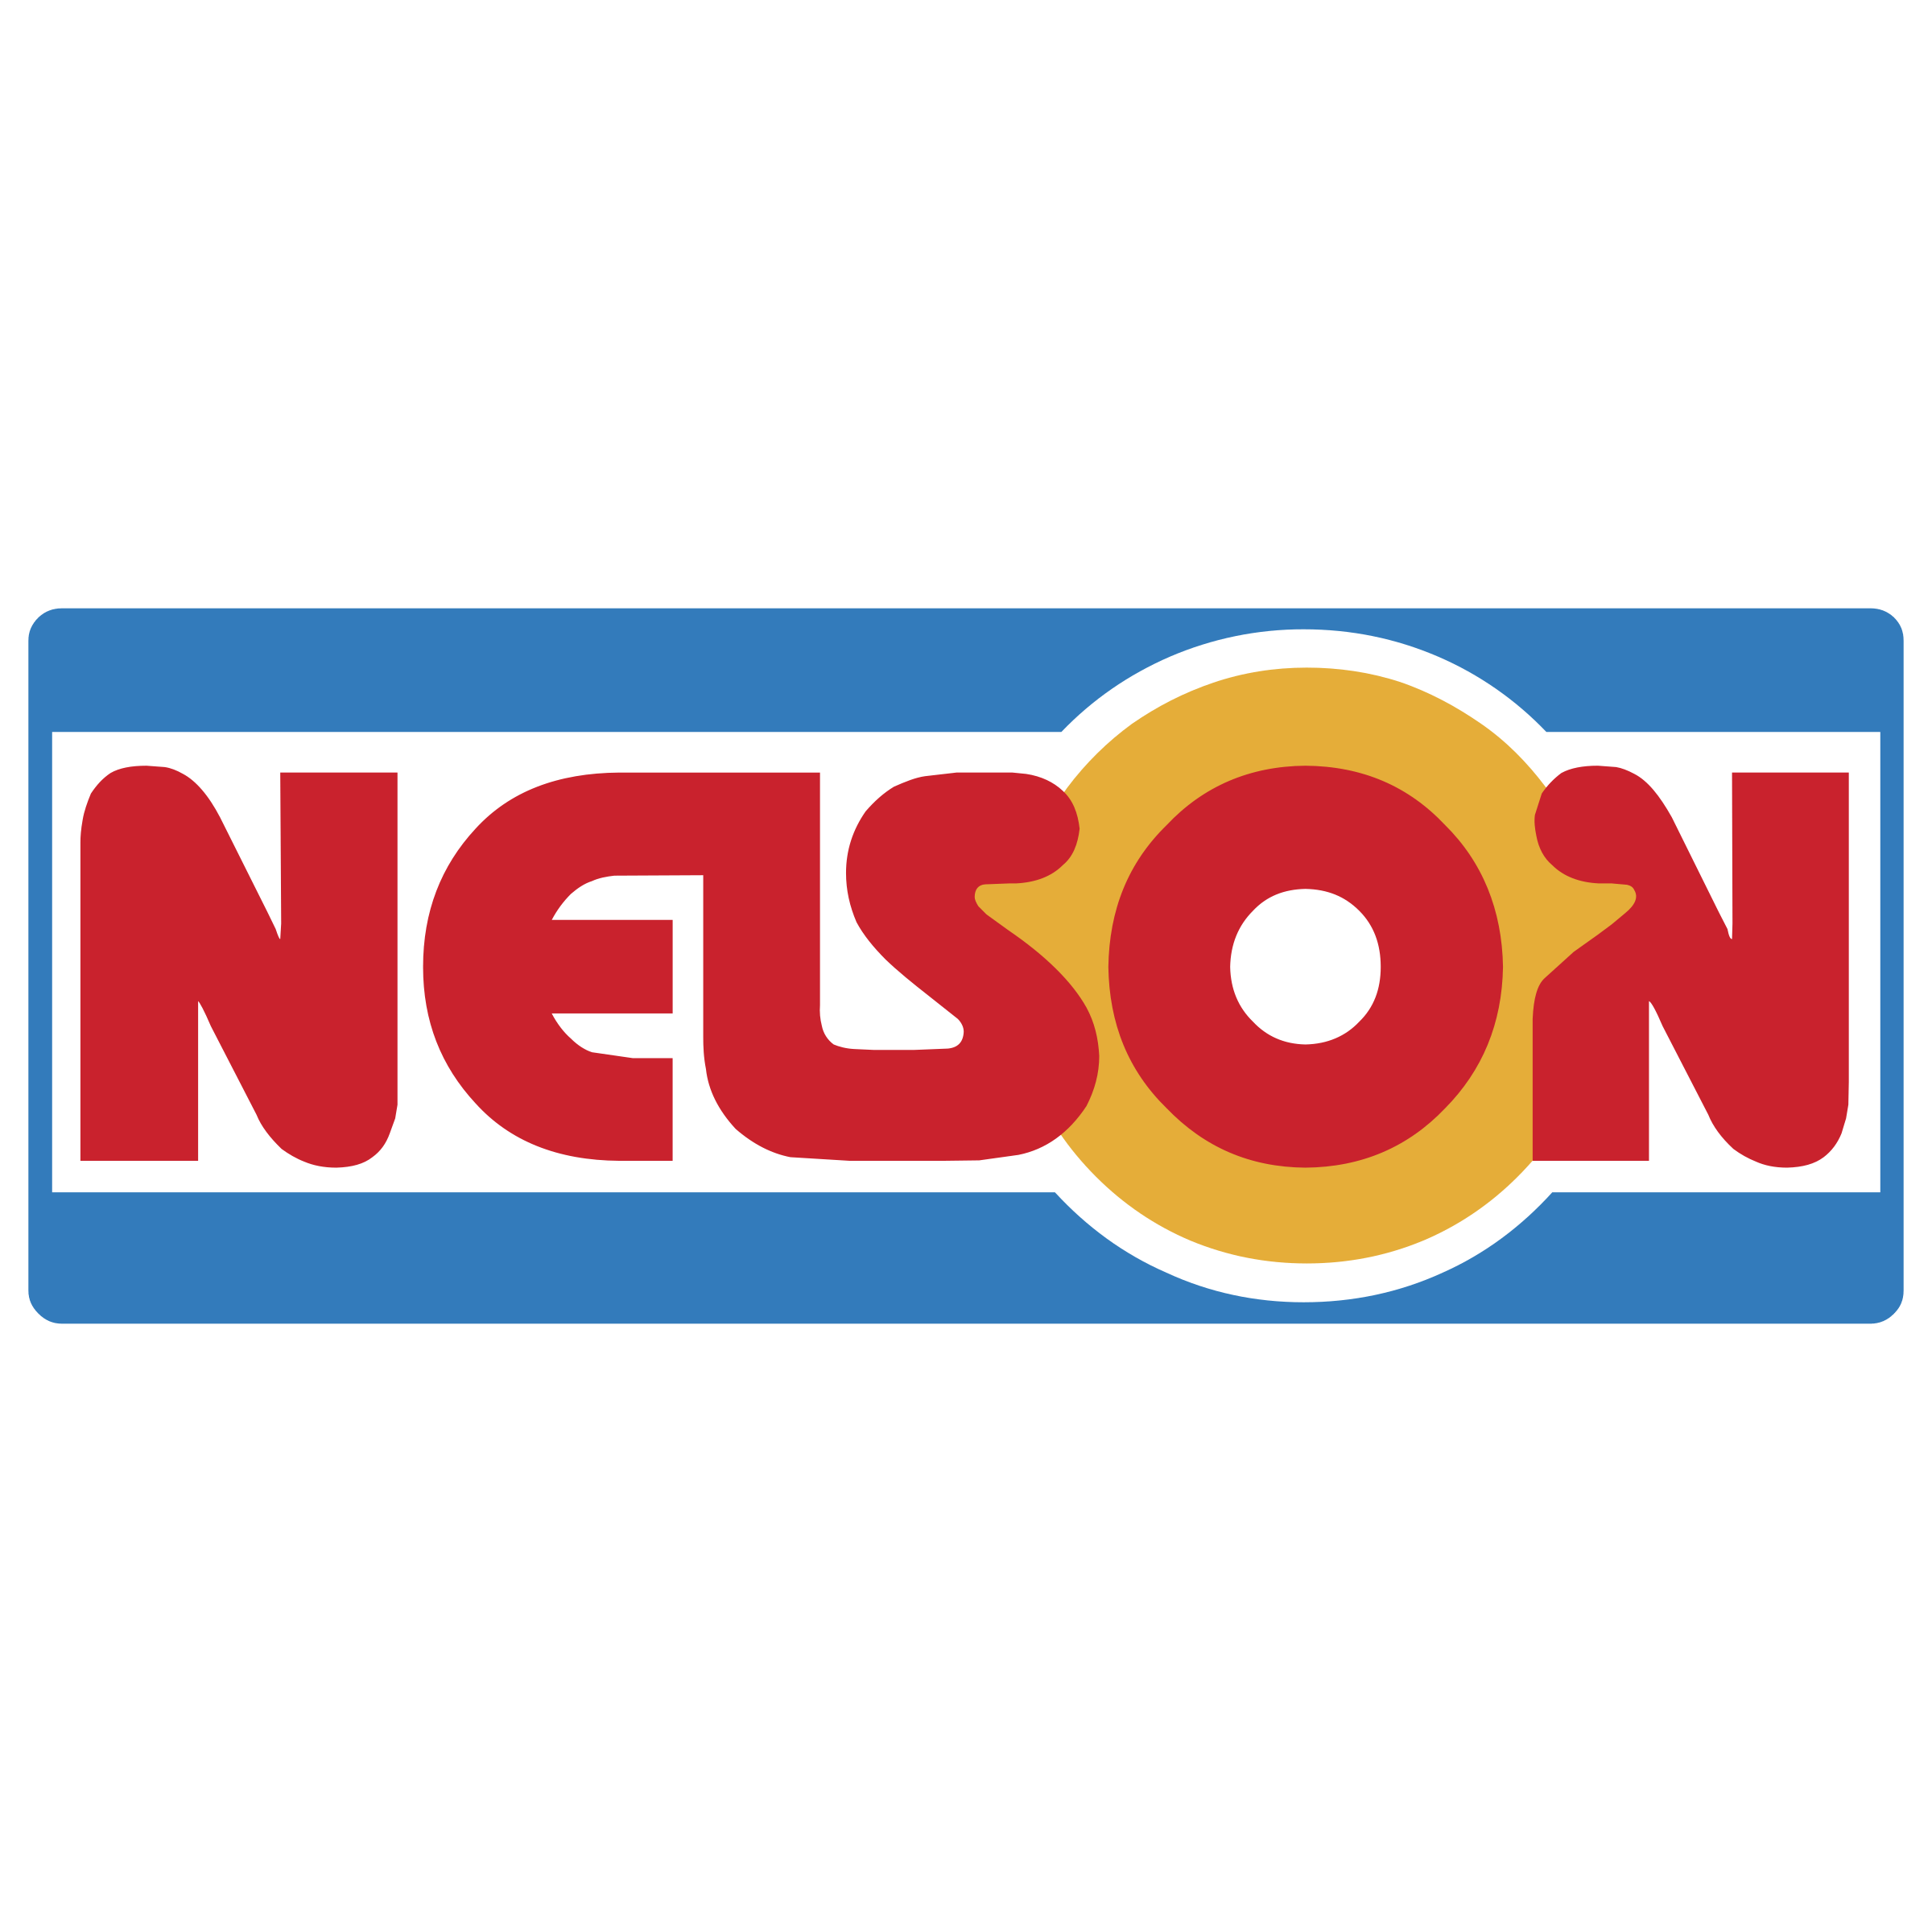 Nelson Logo - Nelson Logo PNG Transparent & SVG Vector - Freebie Supply